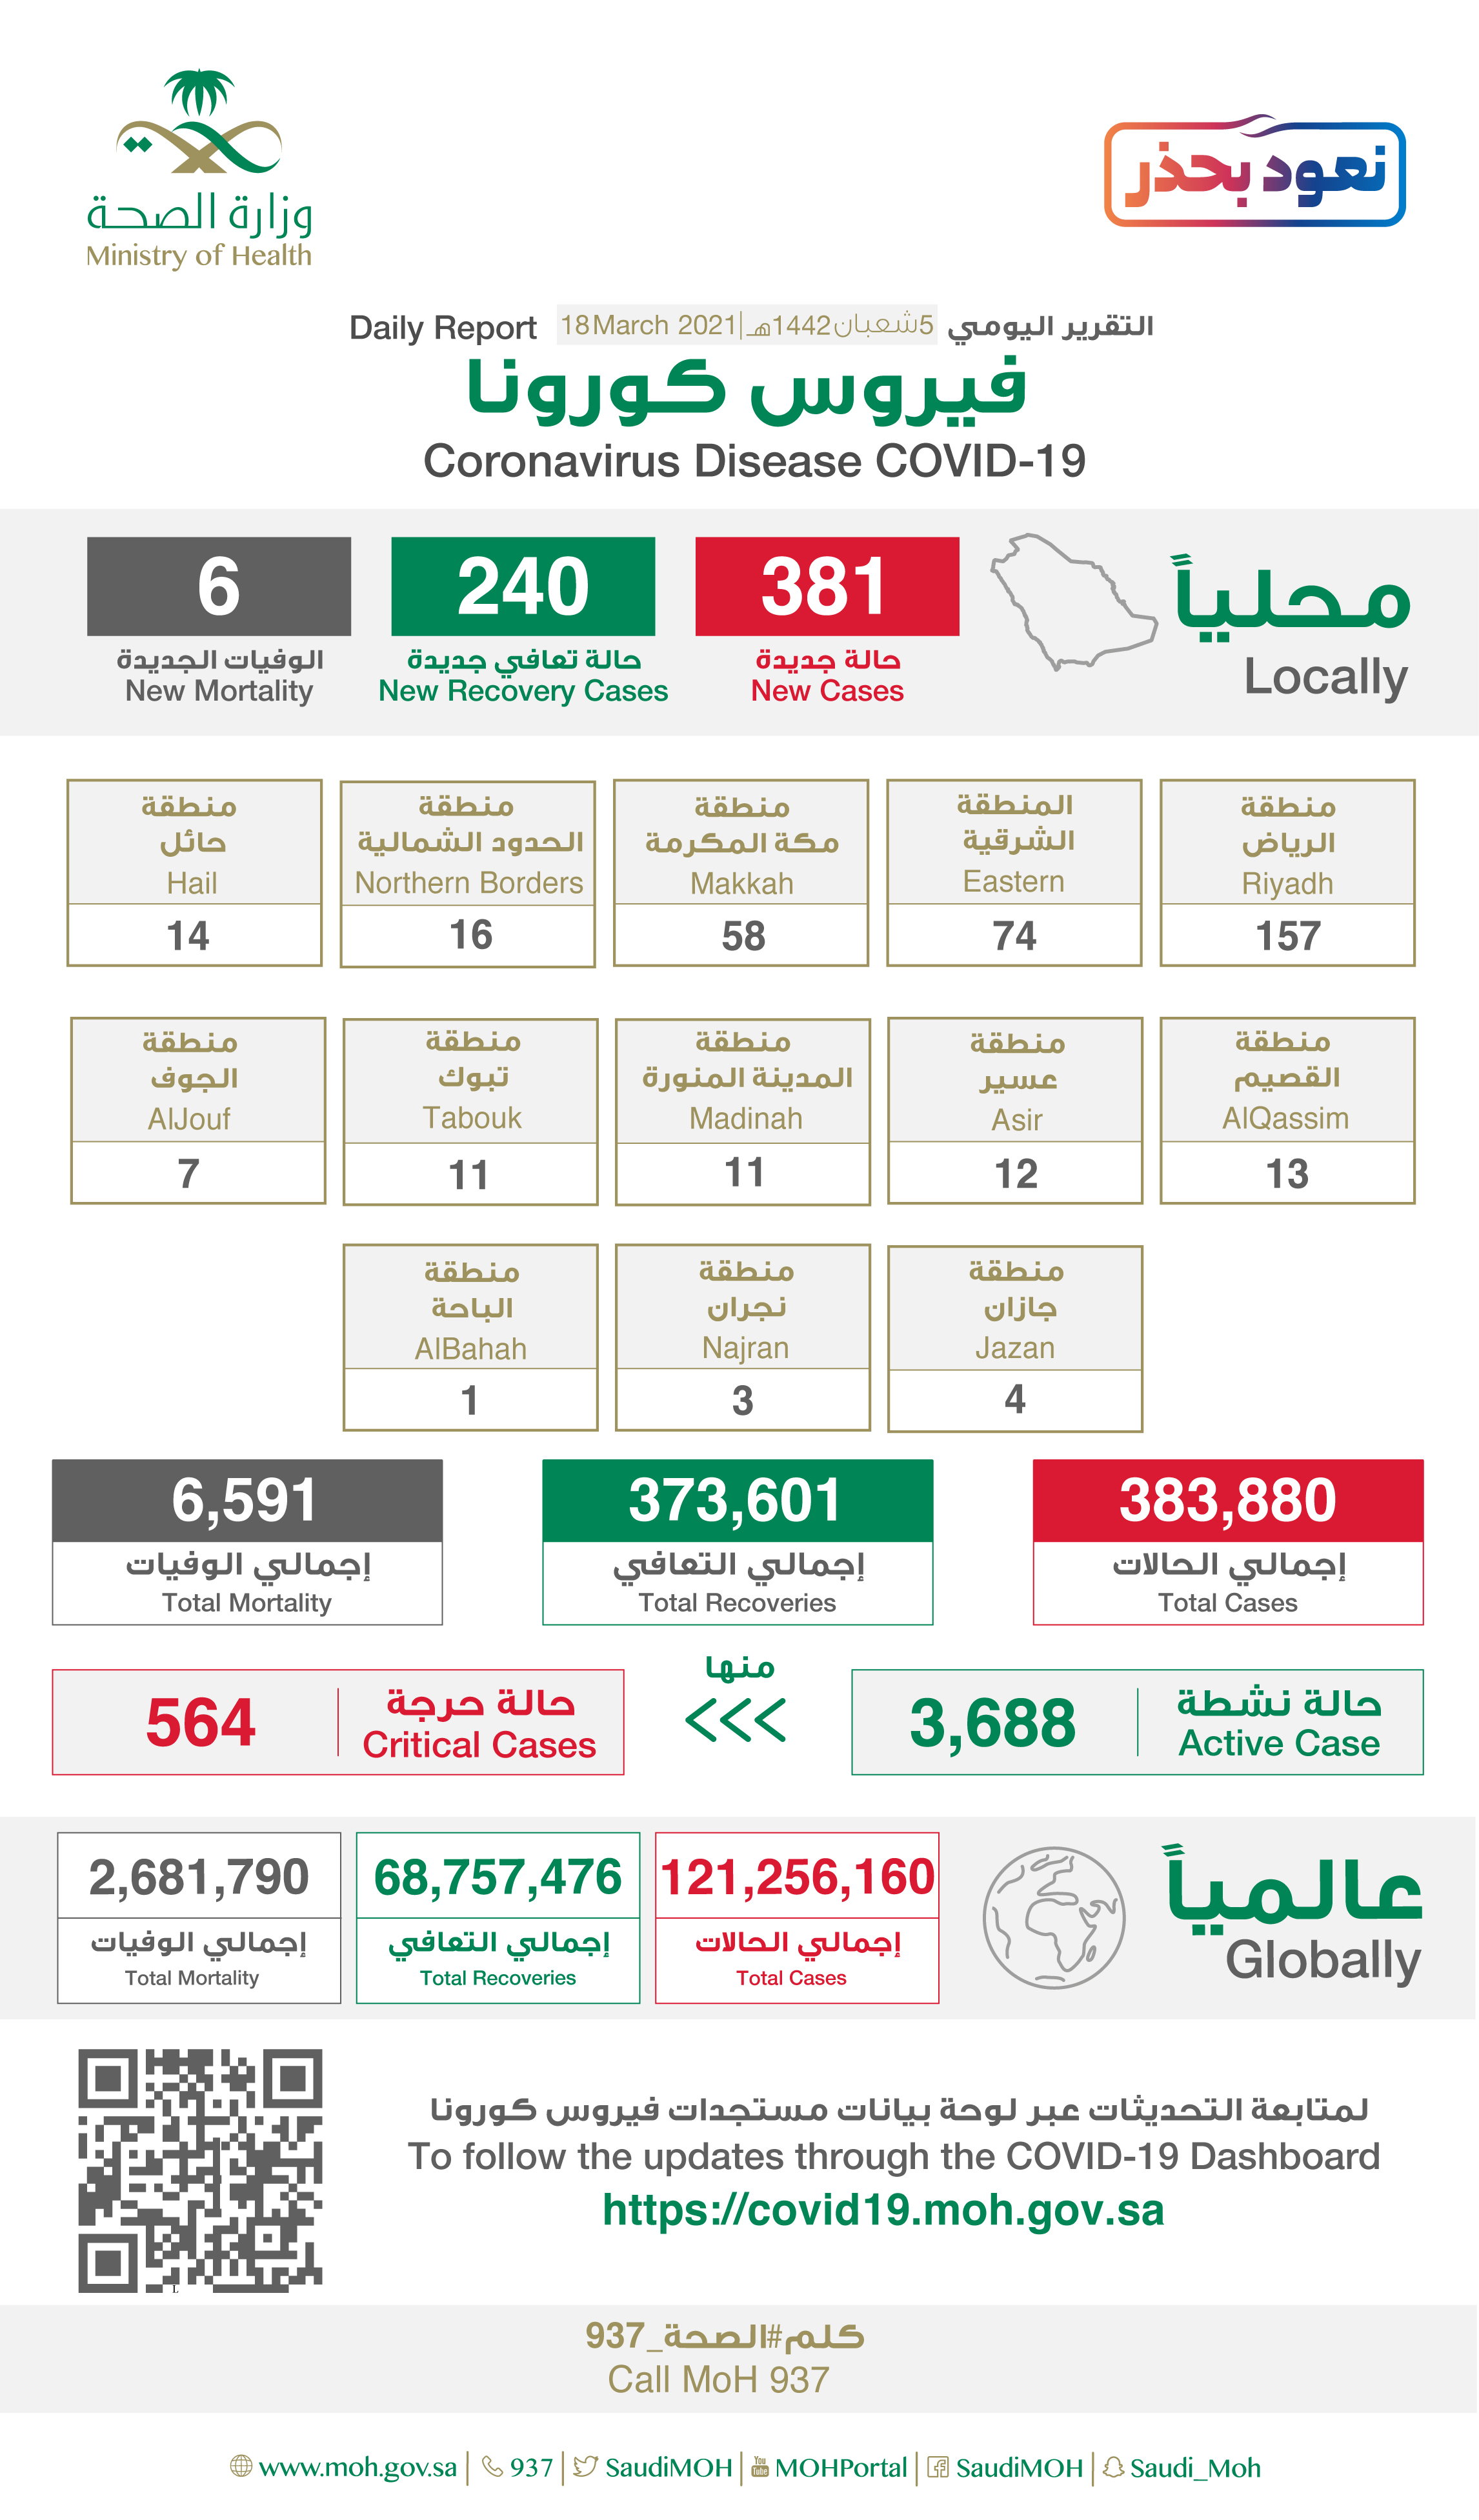 Saudi Arabia Coronavirus : Total Cases :383,880 , New Cases : 381, Cured : 373,601 , Deaths: 6,591, Active Cases : 3,688